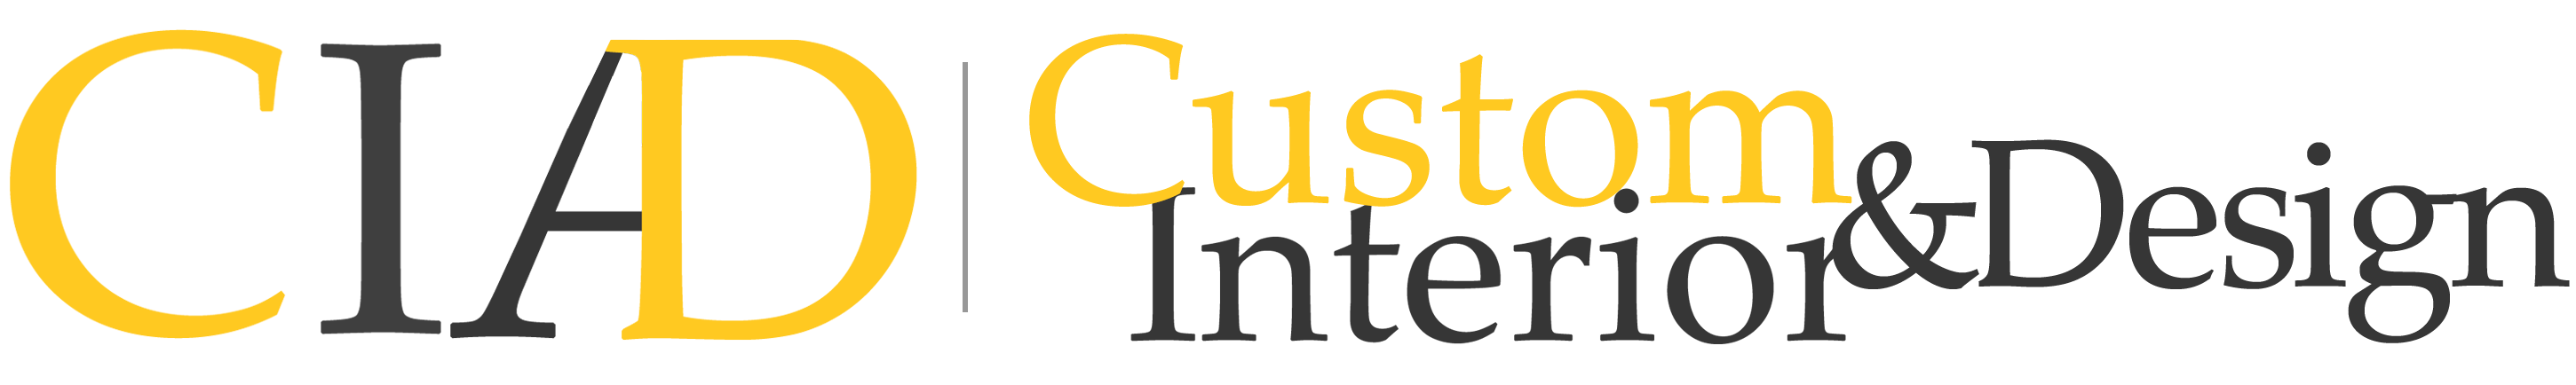 Custom Interior & Design, LLC Logo